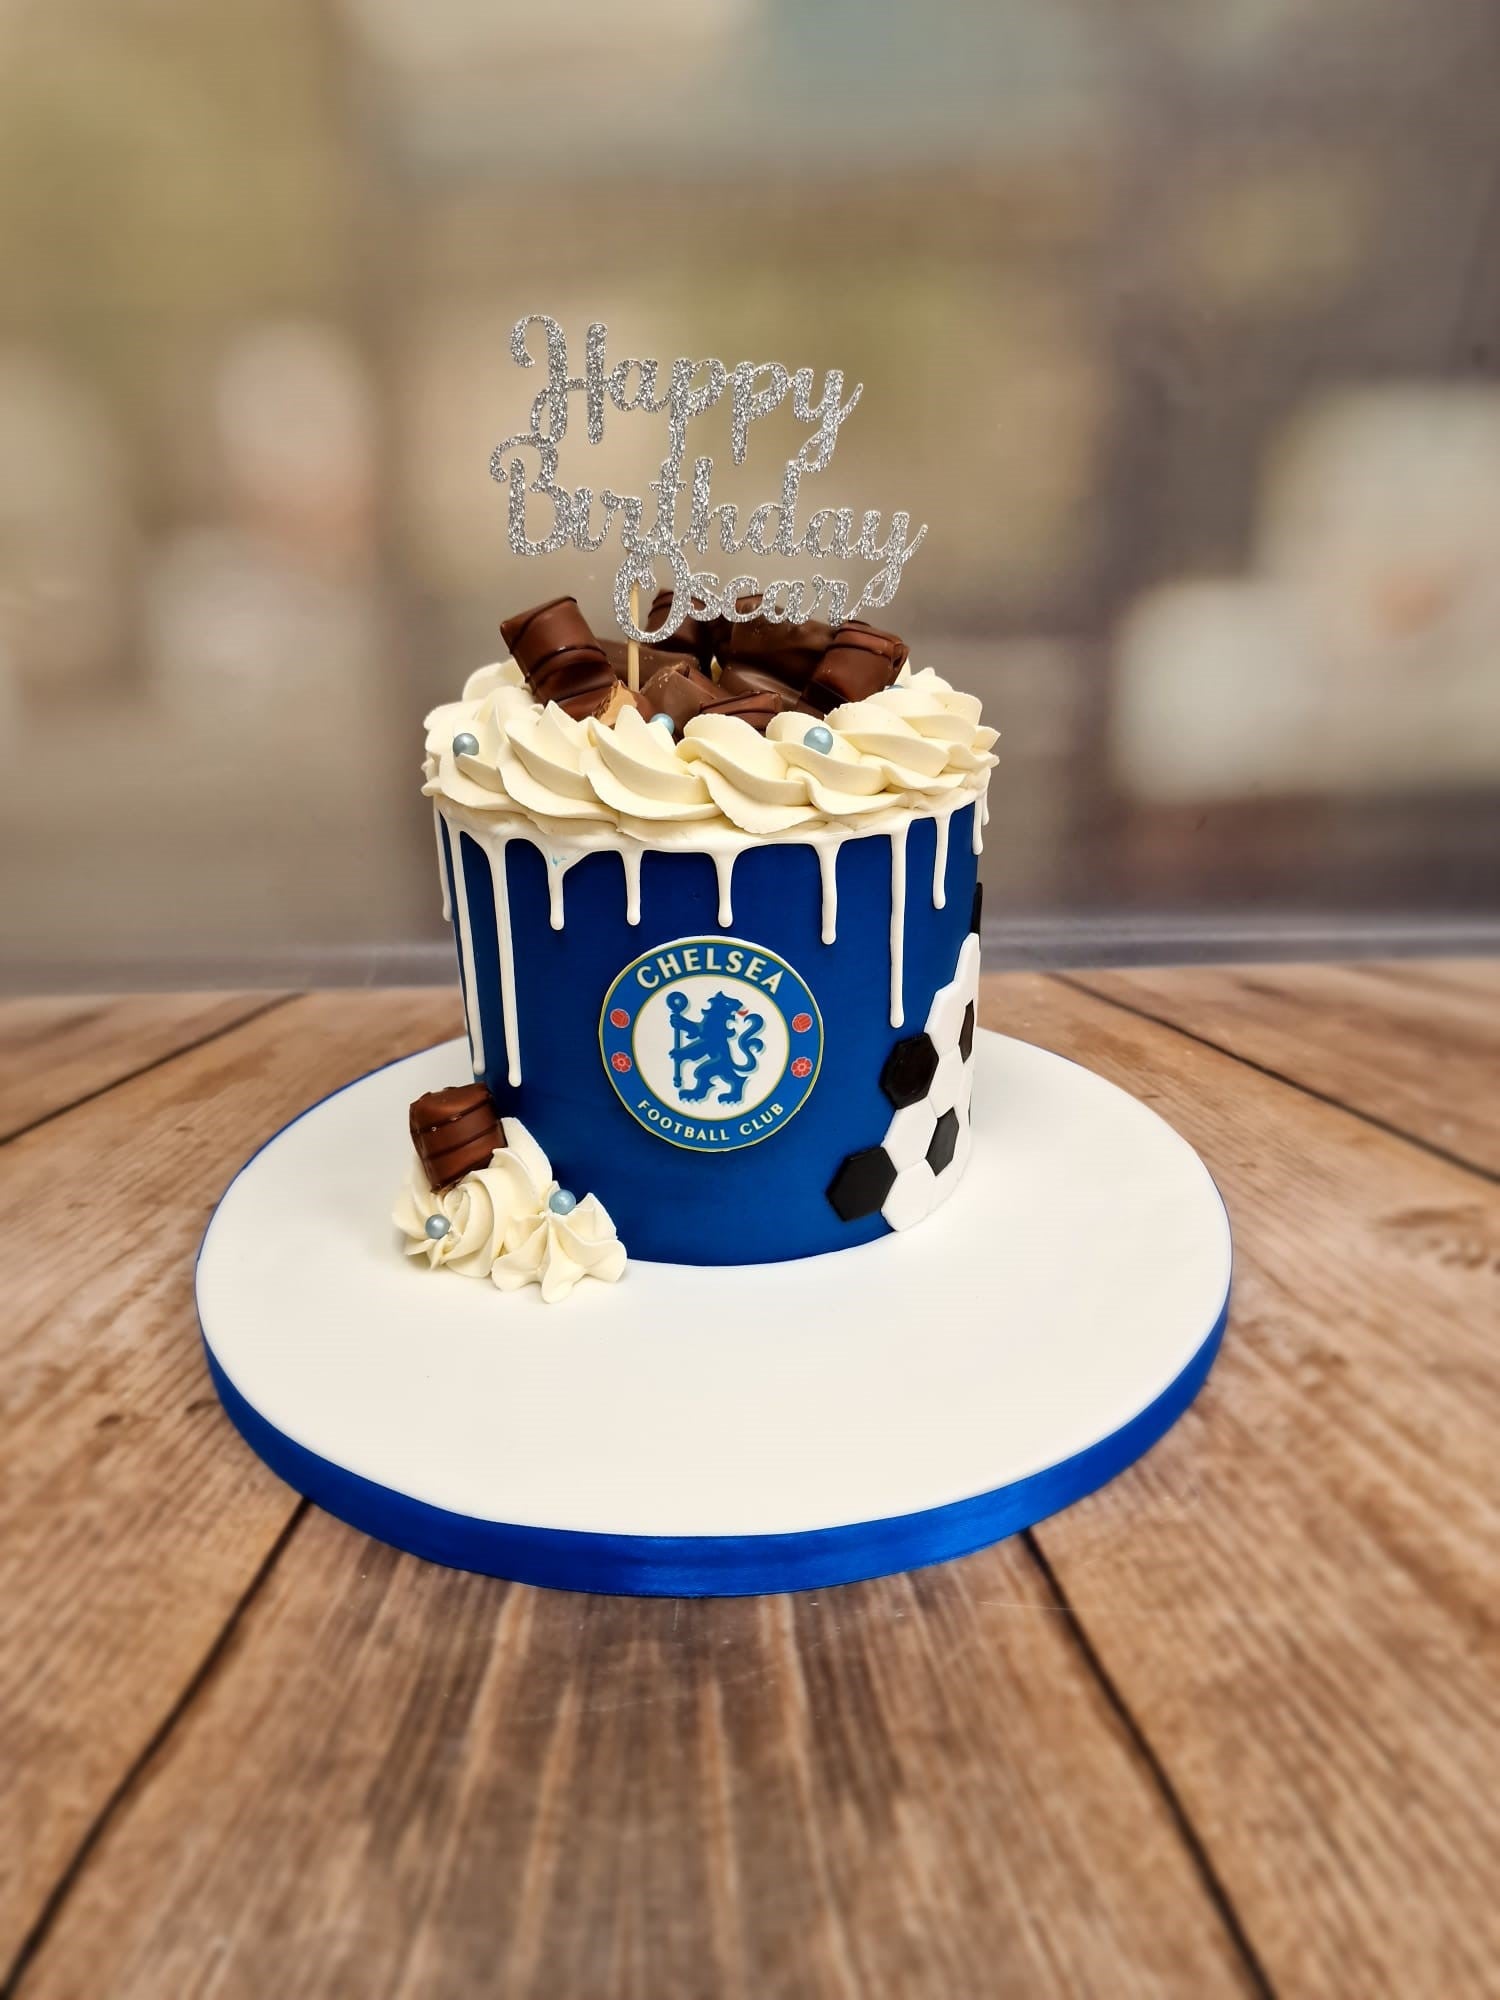 Chelsea fc cake